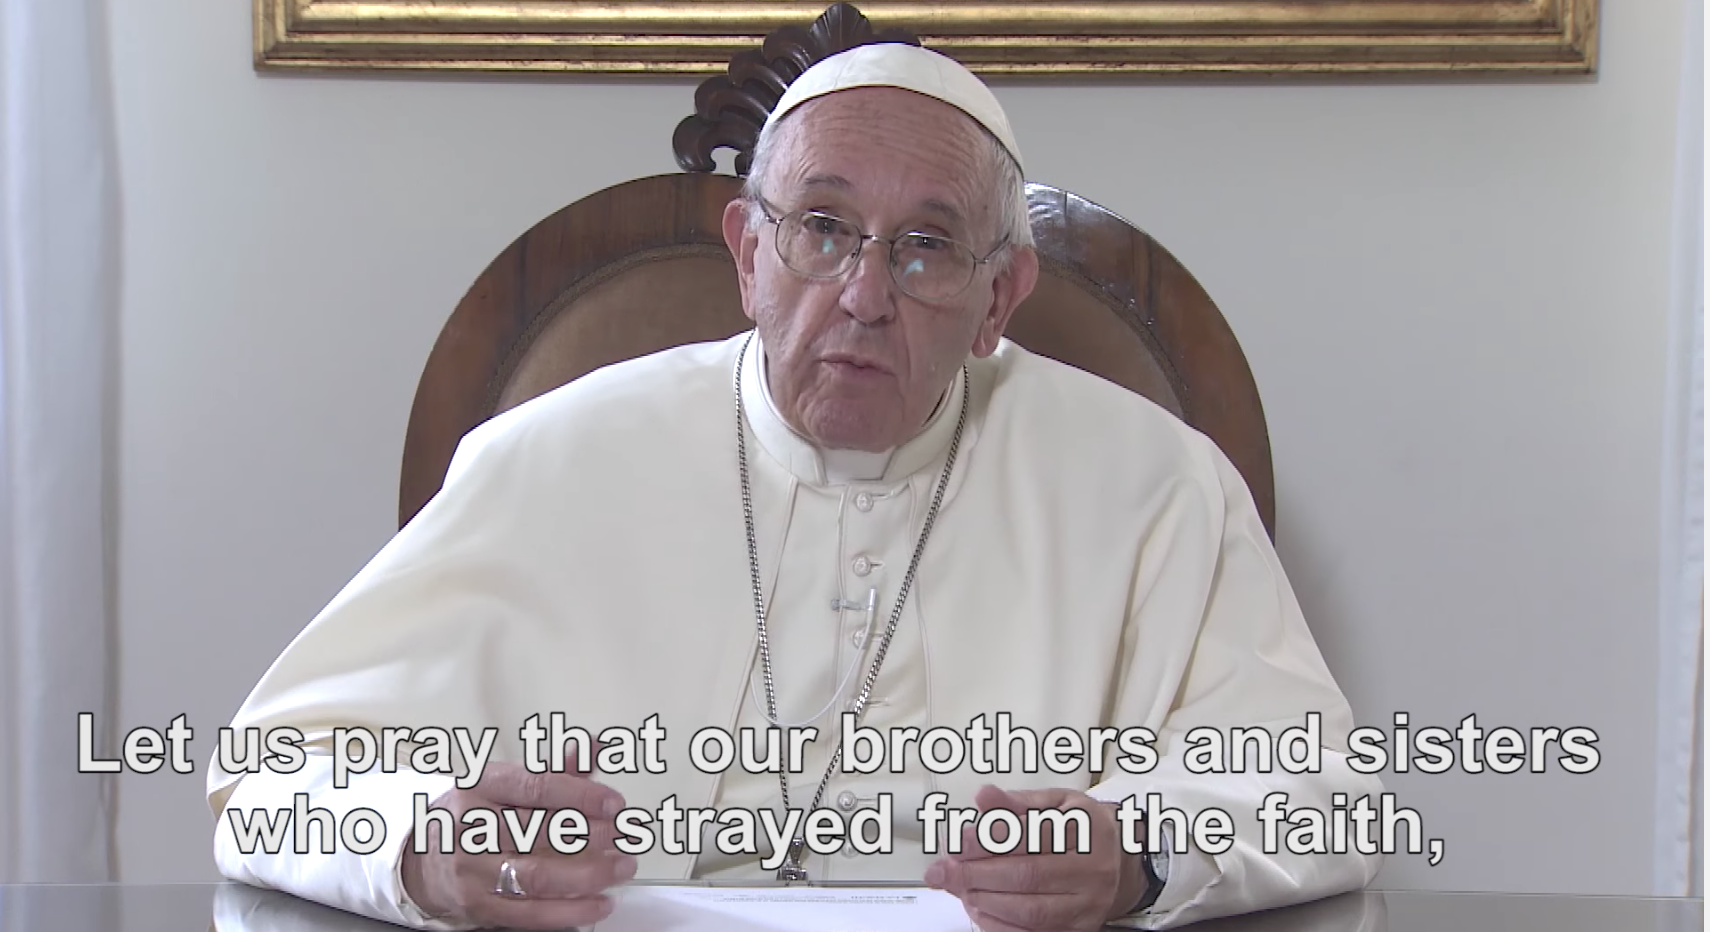 Pope Francis’ July Prayer Intention